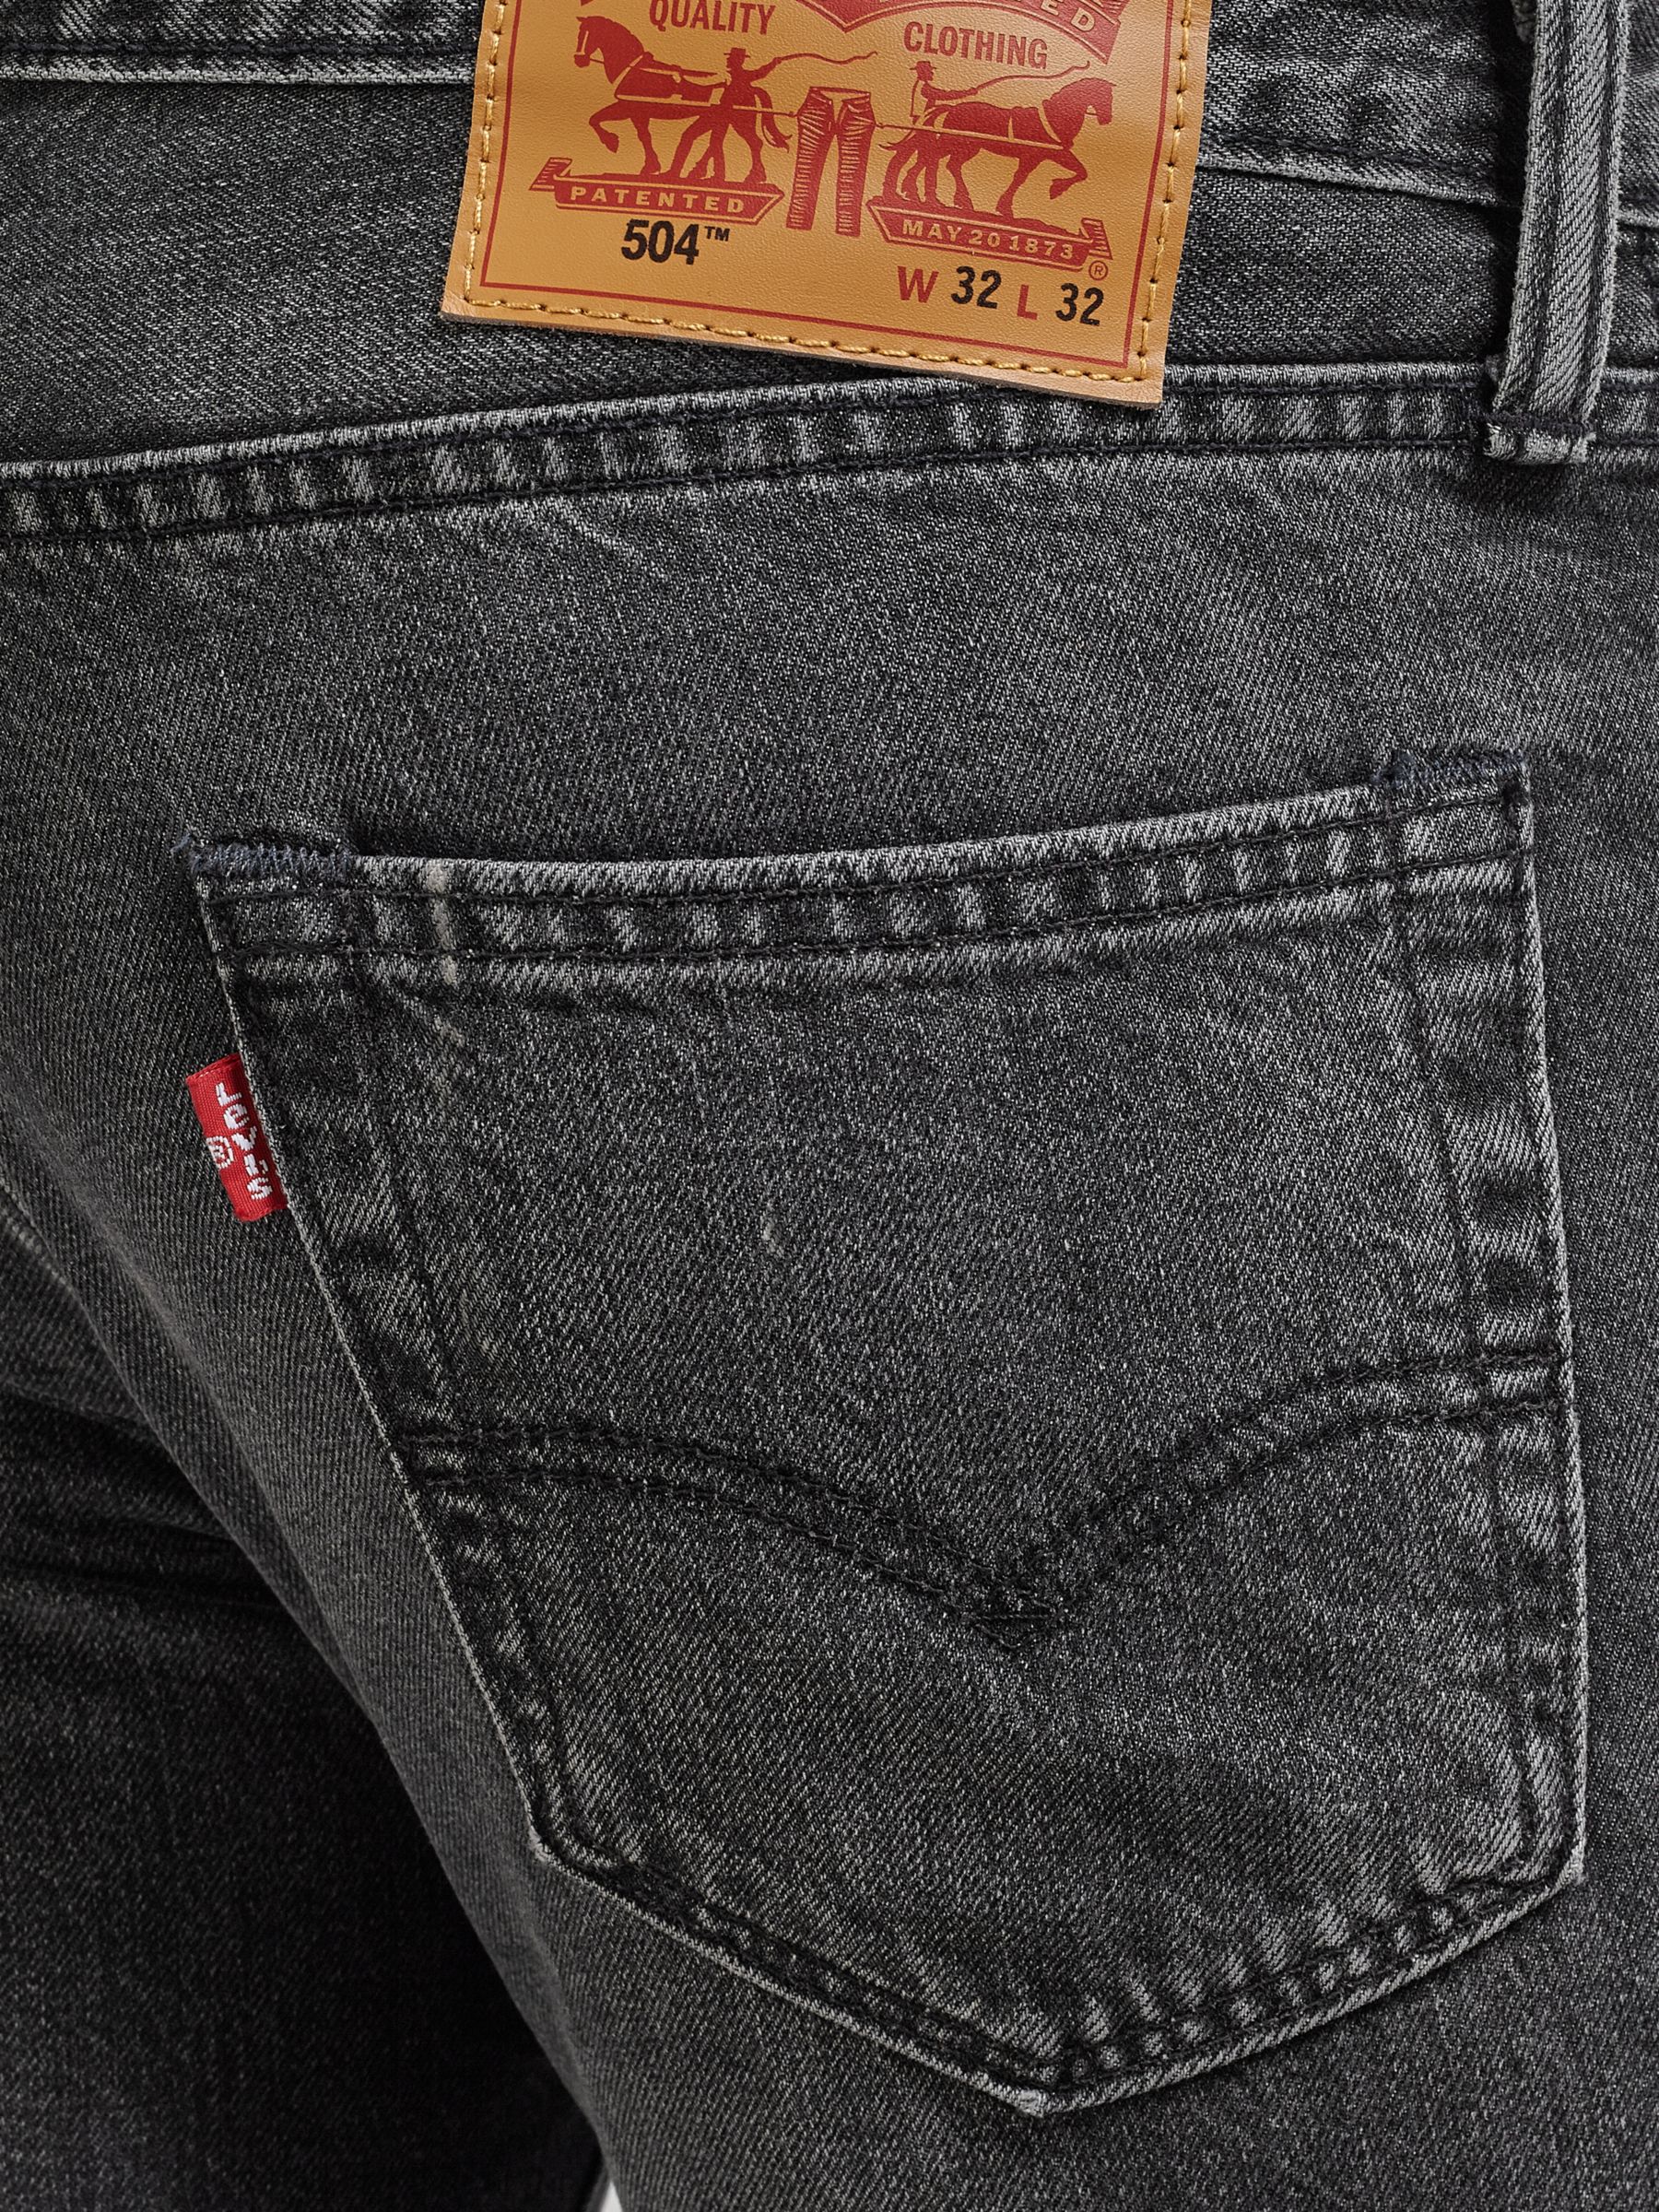 levis jeans 504 regular straight fit